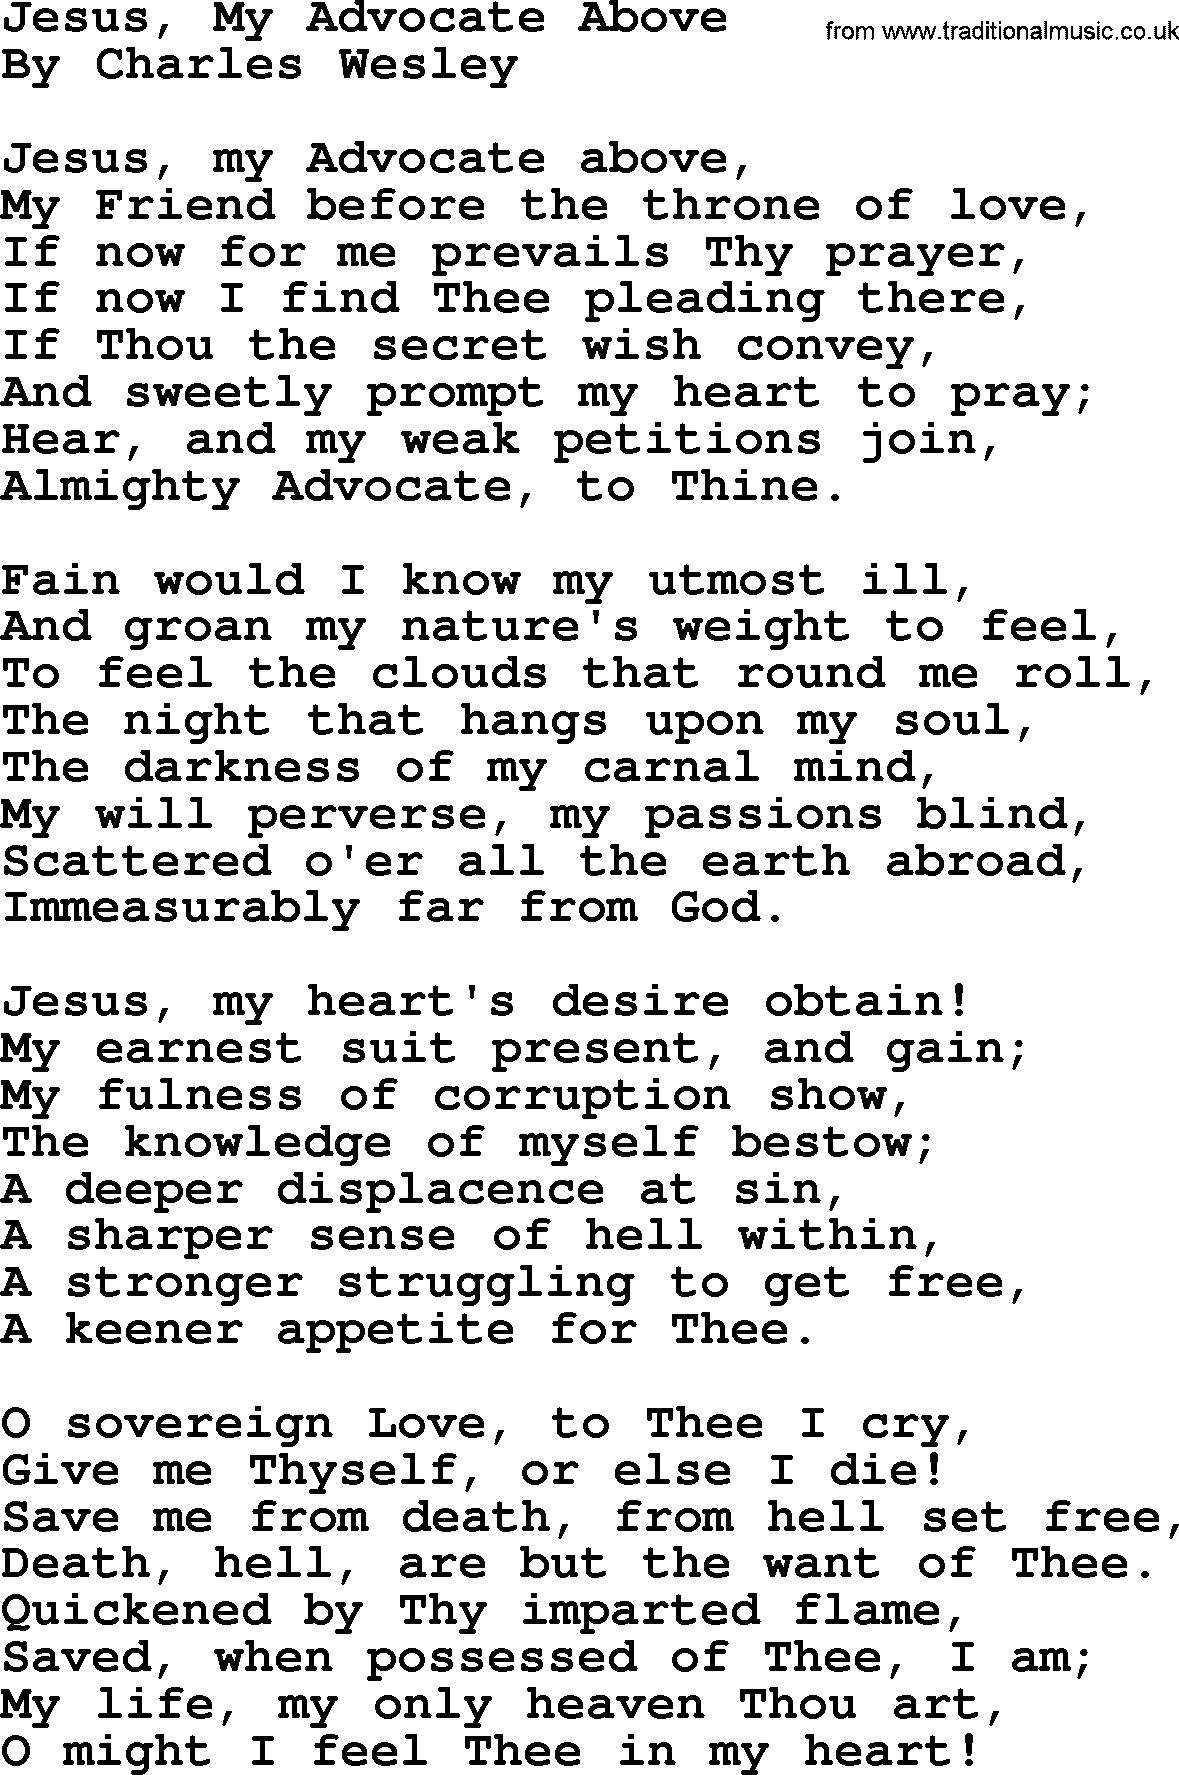 Charles Wesley hymn: Jesus, My Advocate Above, lyrics